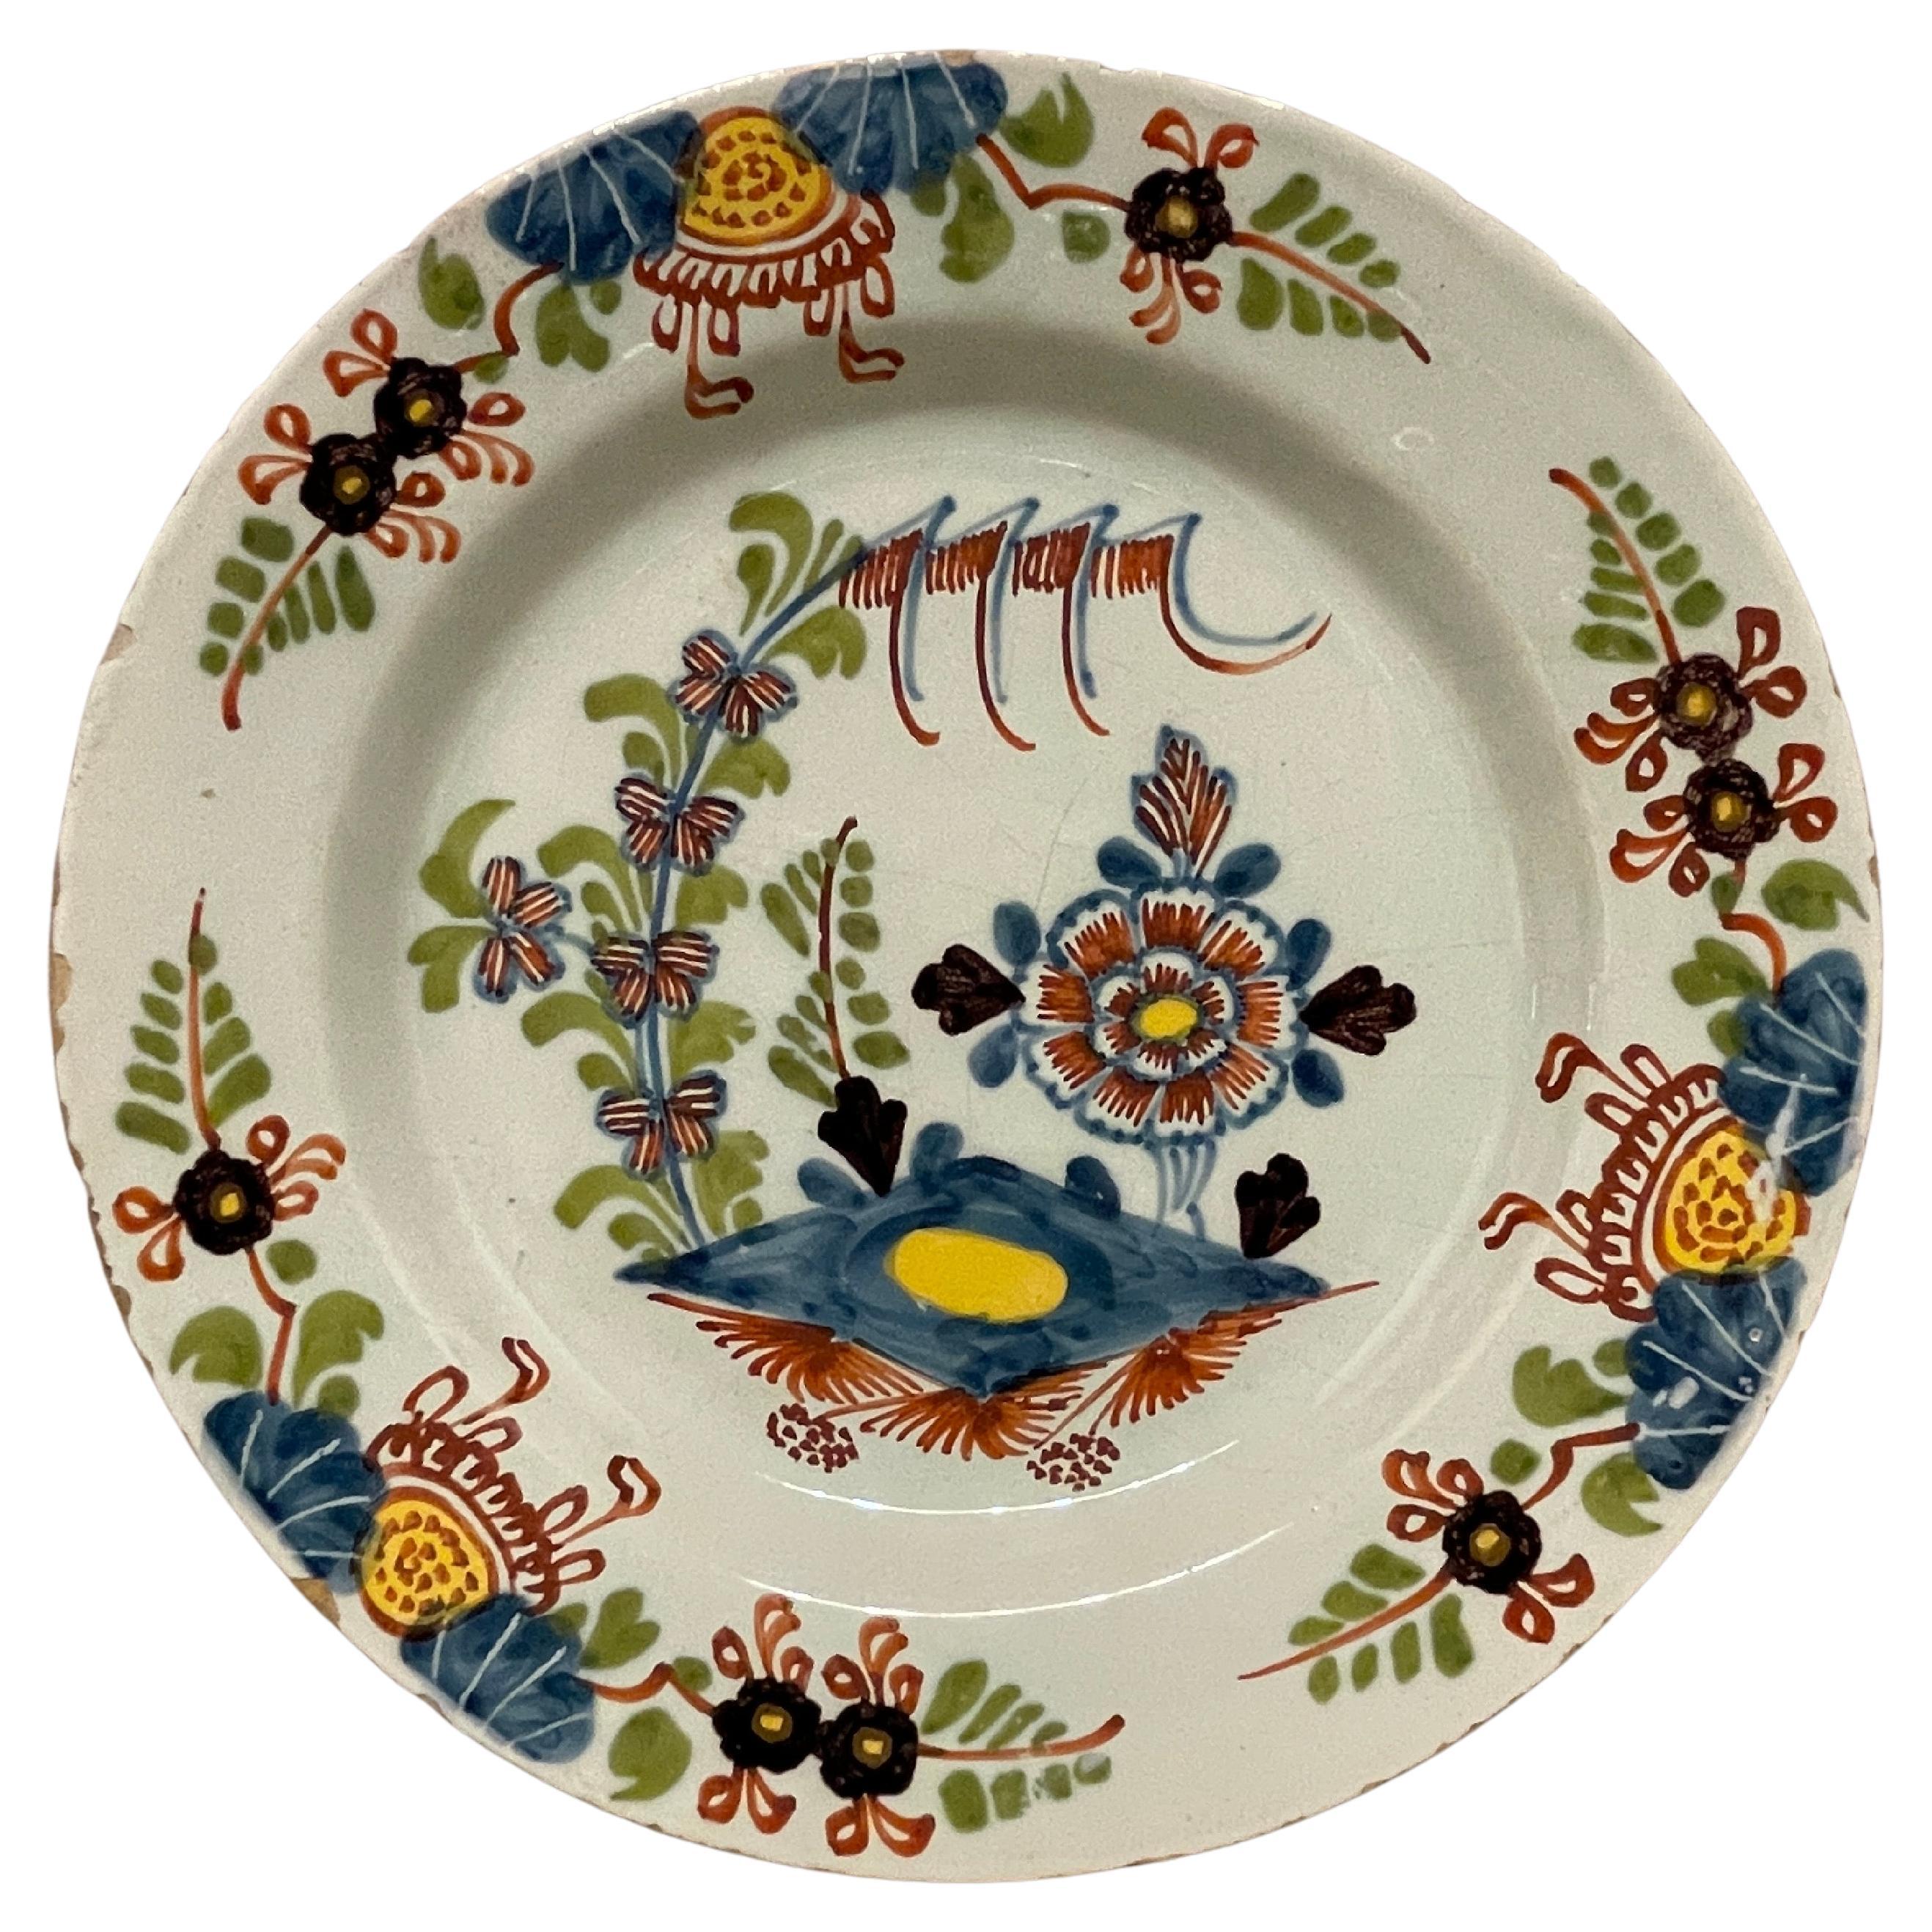 18th Century English Delft Tin Glaze Faience Polychrome Plate